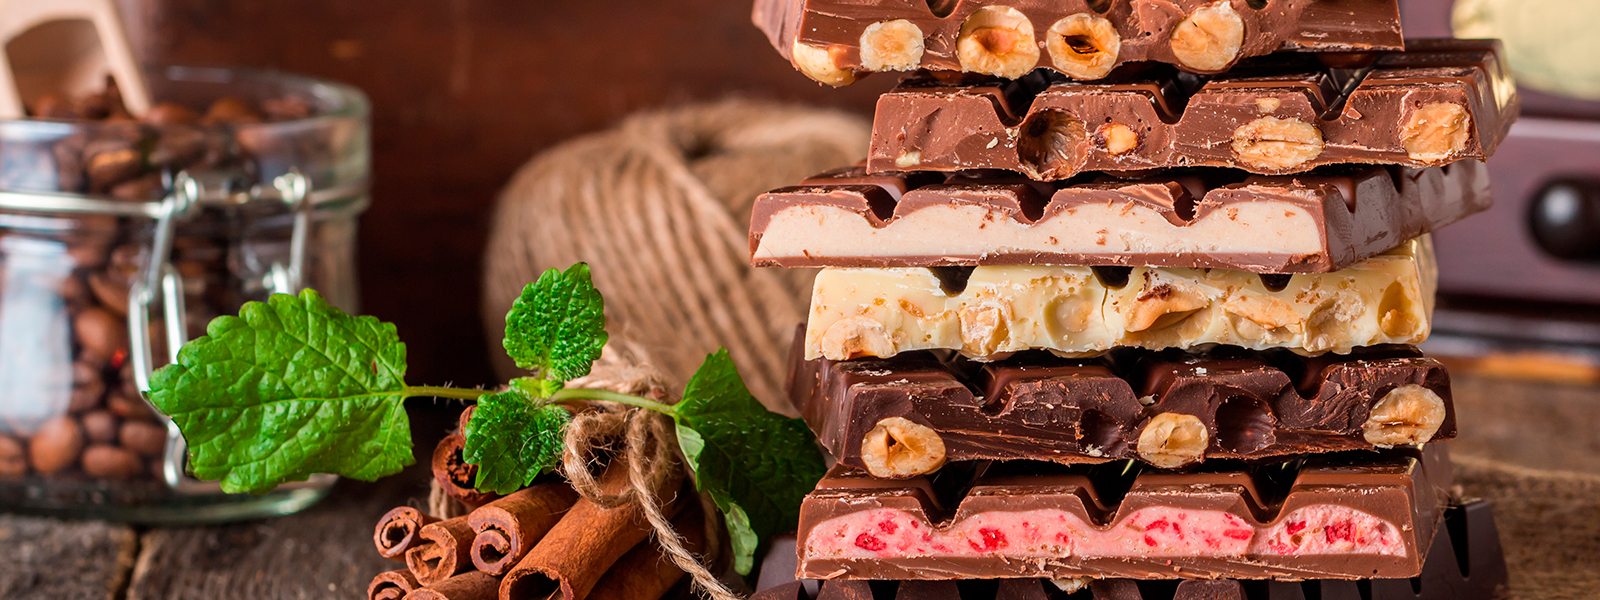 banner-carino-ingredientes-chocolate-recheios-produtos